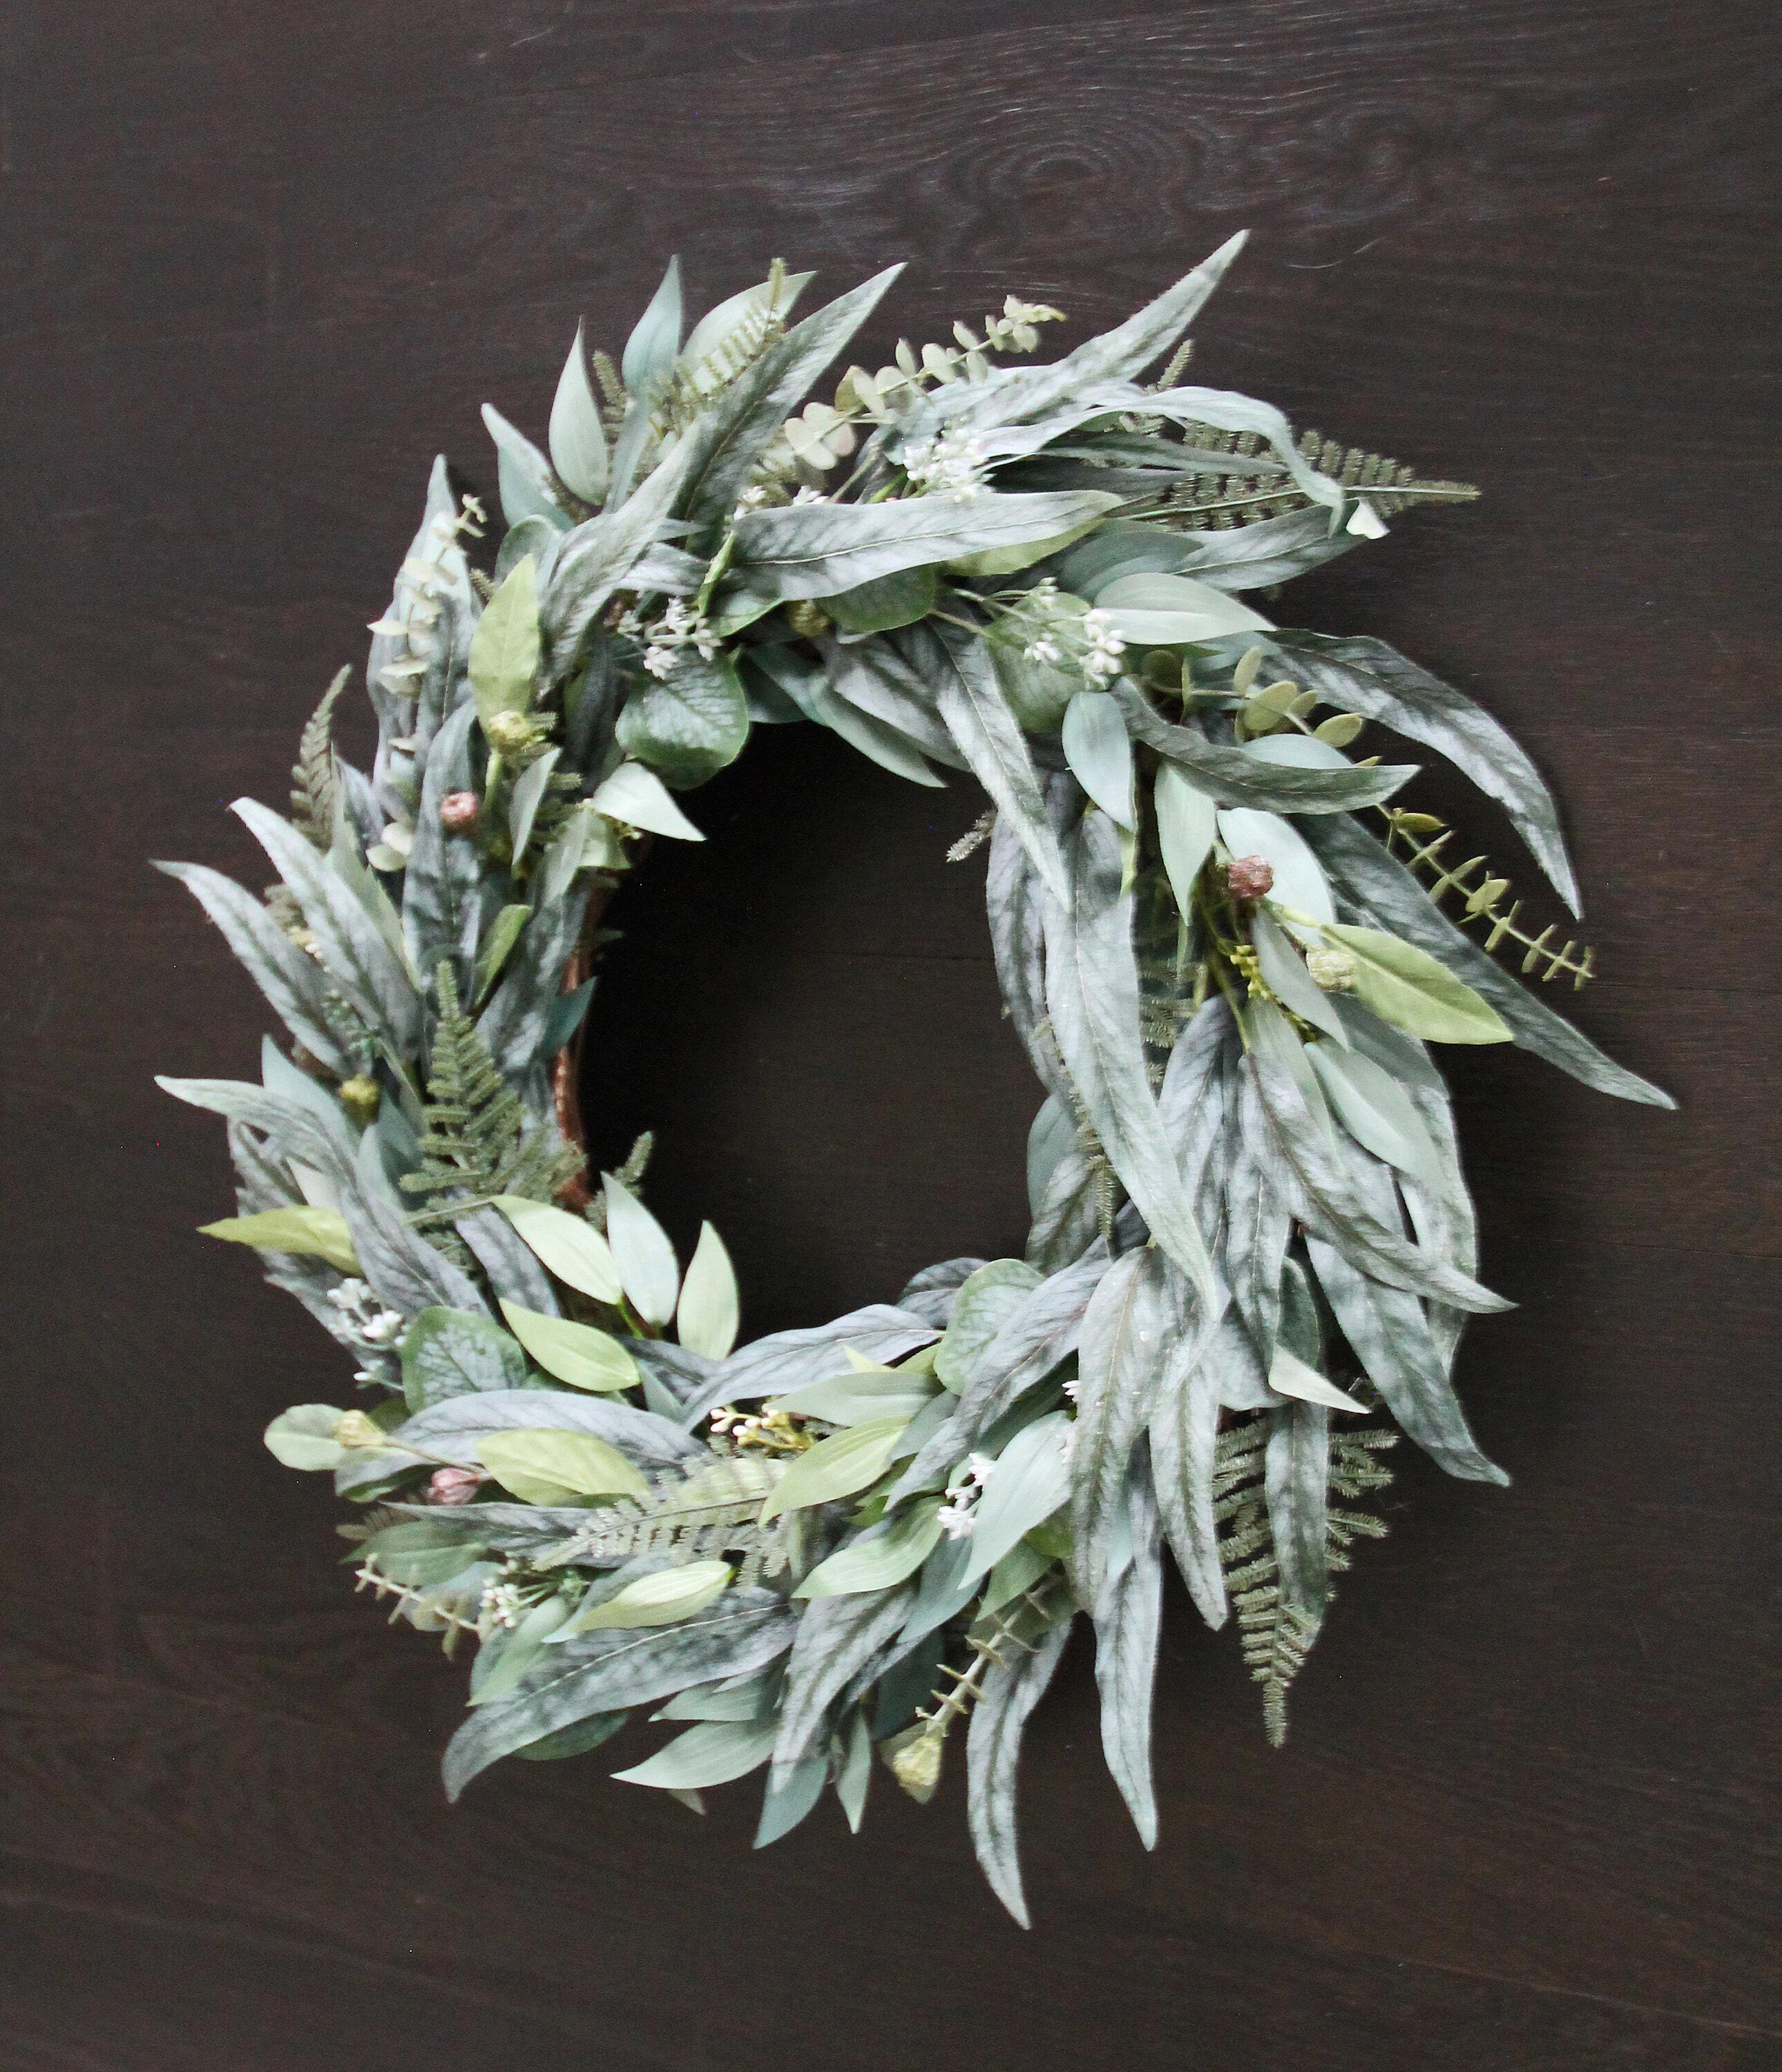 Everyday Wreath, Year Round Greenery Wreath, Neutral Wreath